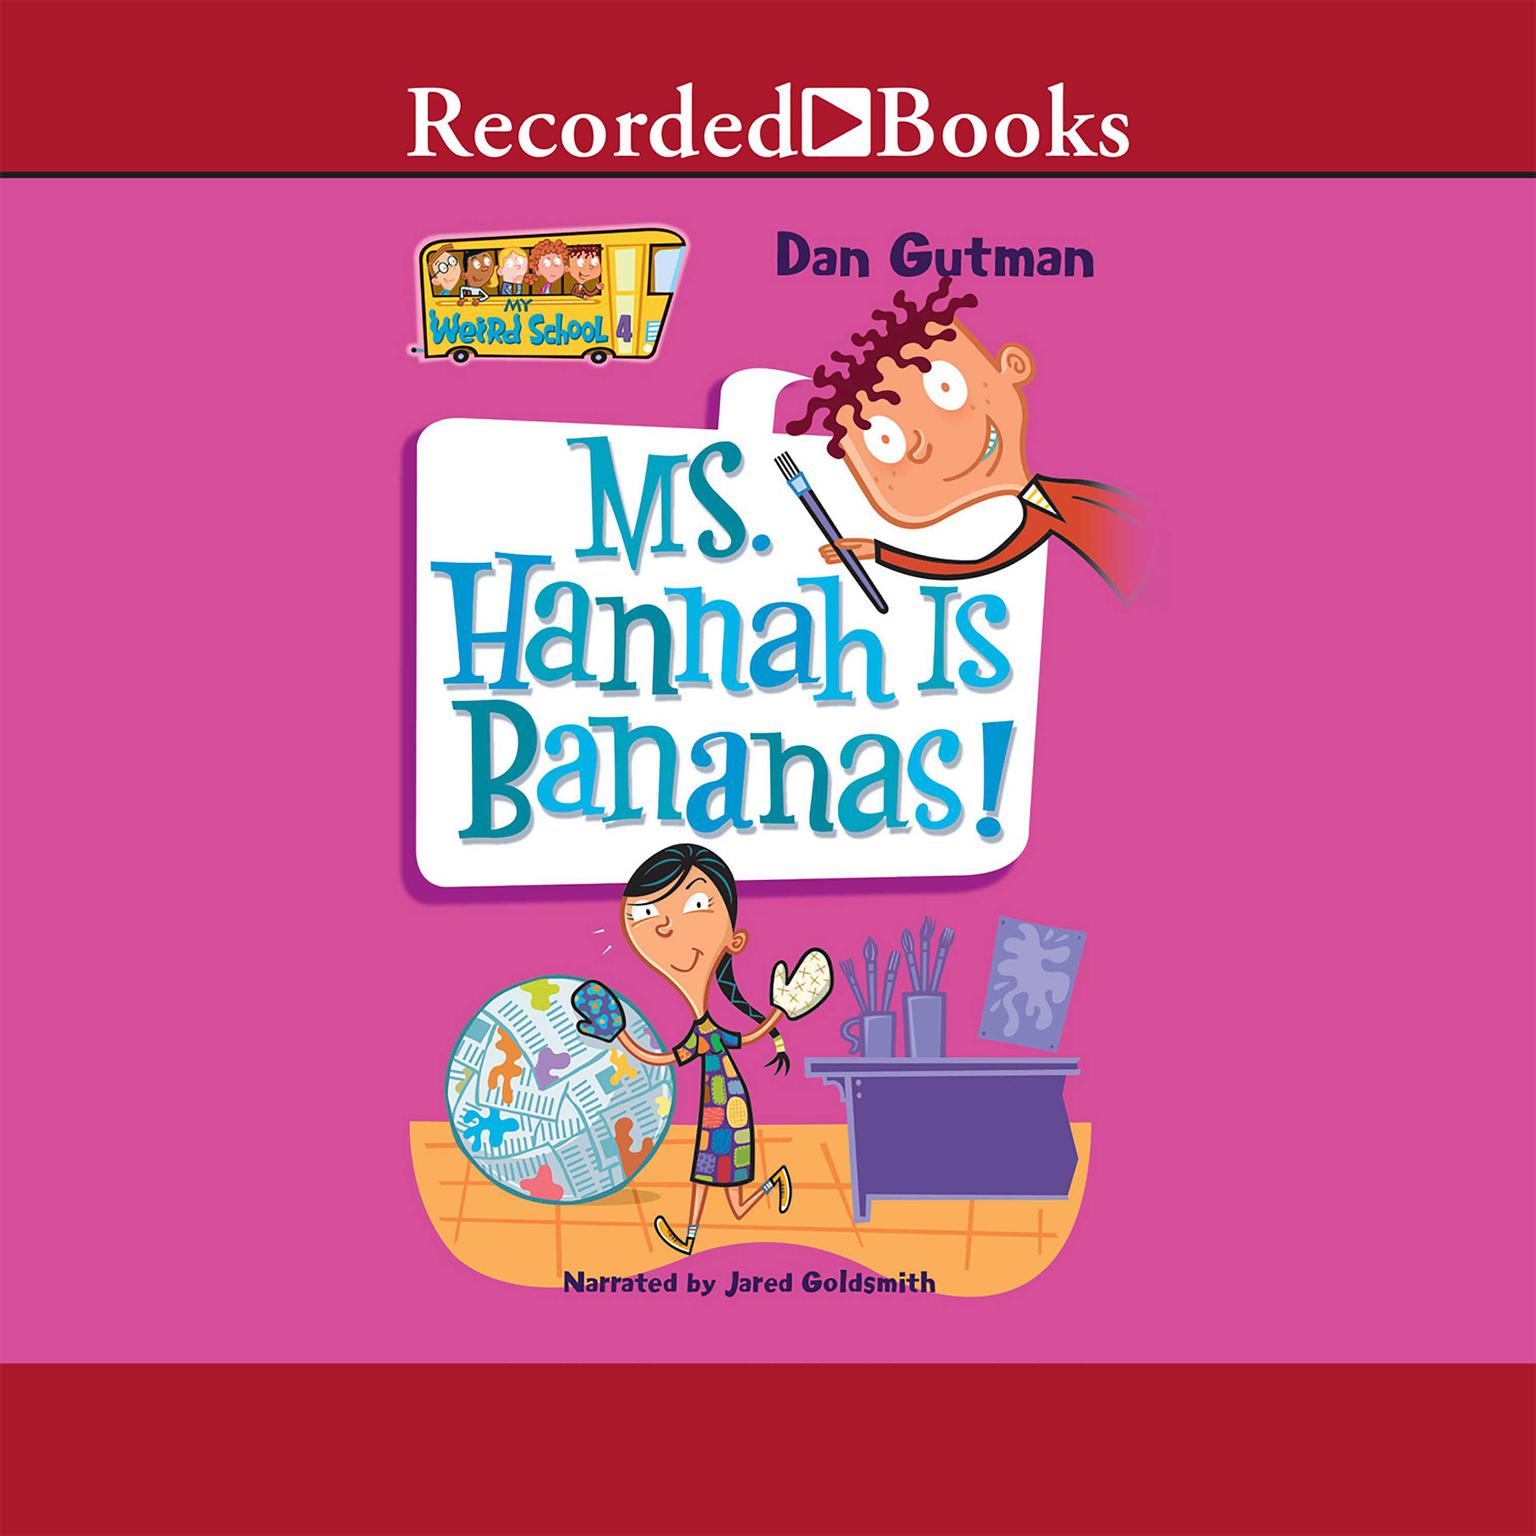 Ms. Hannah is Bananas! Audiobook by Dan Gutman — Download & Listen Now